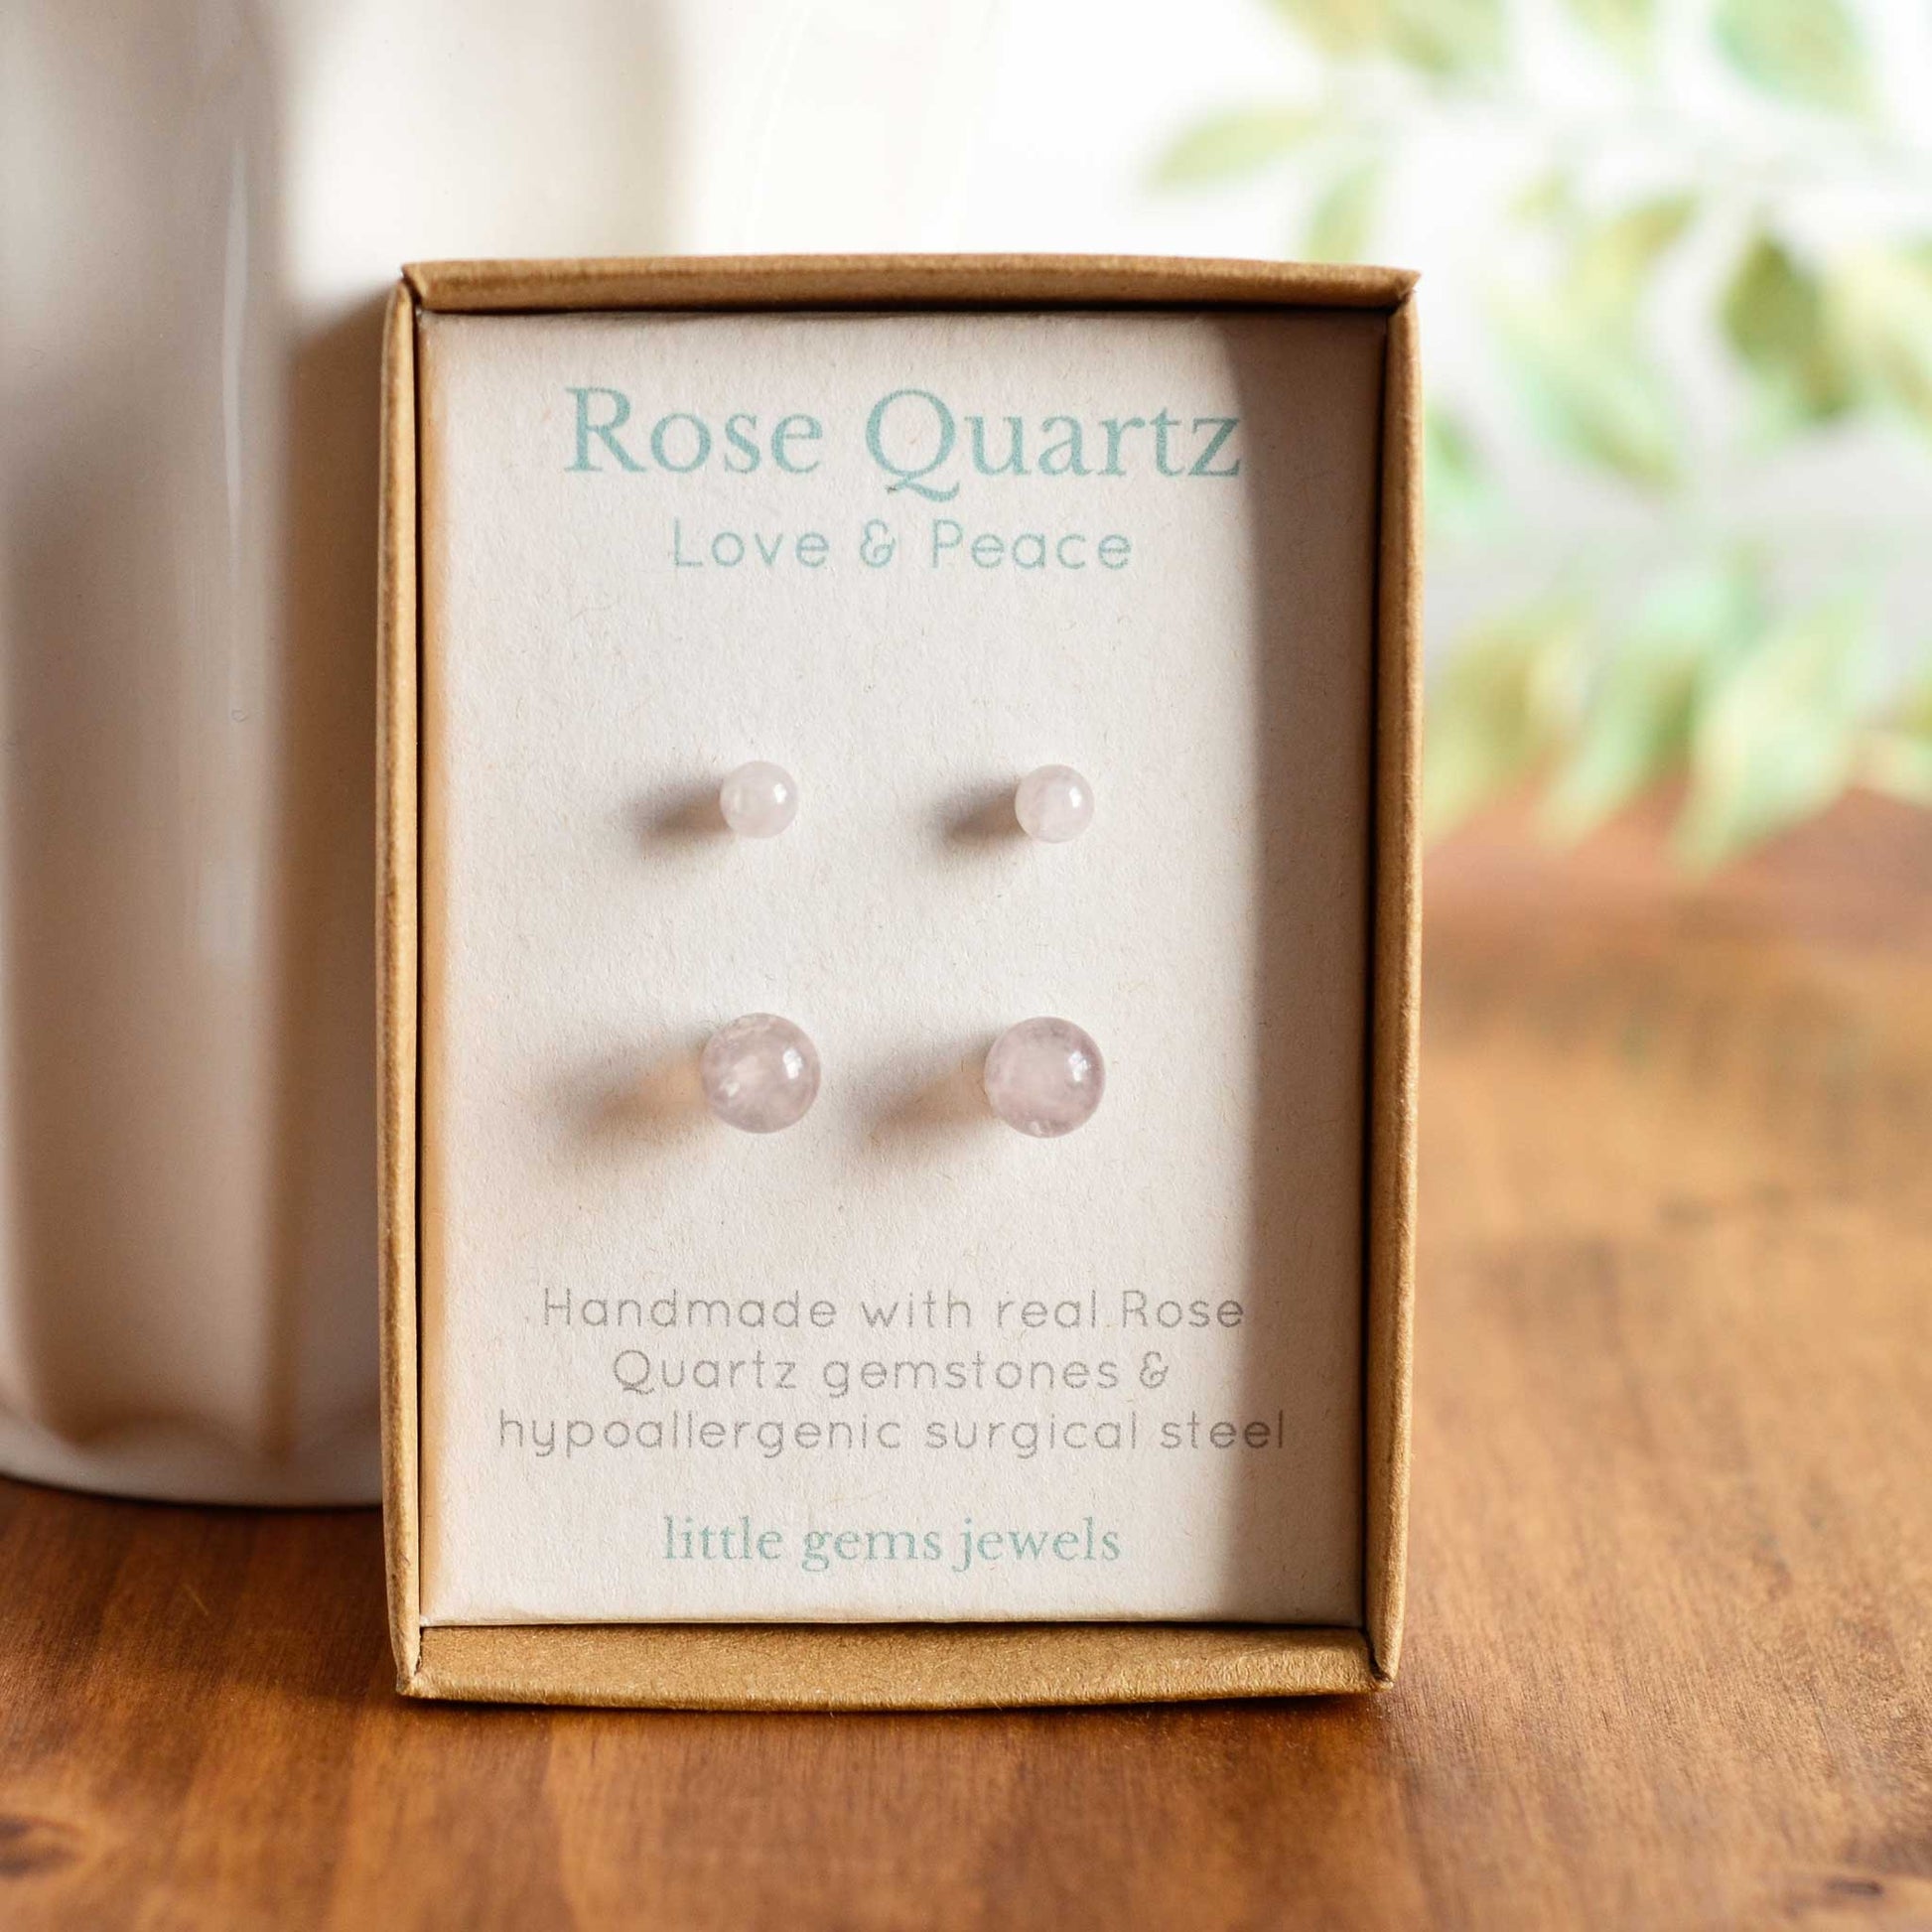 4mm & 6mm Rose Quartz gemstone stud earrings in eco friendly gift box